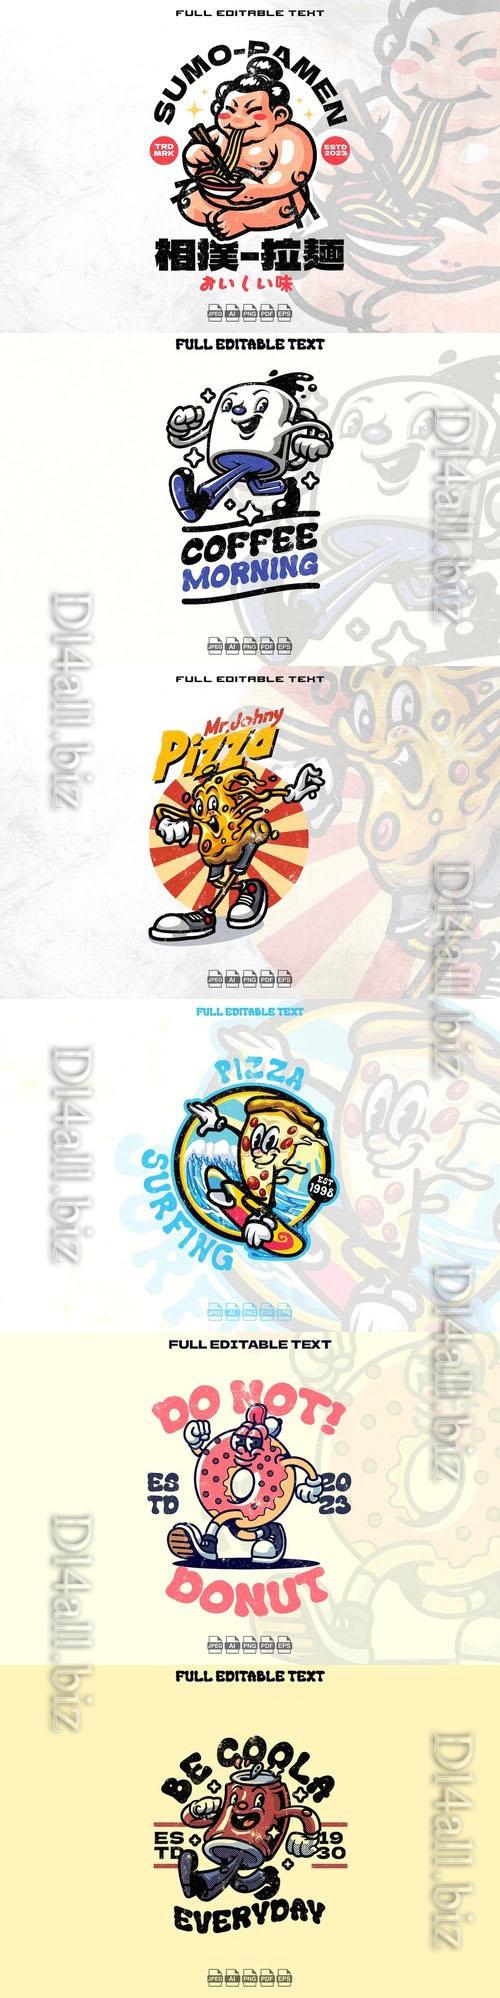 Retro cartoon character mascot logo set